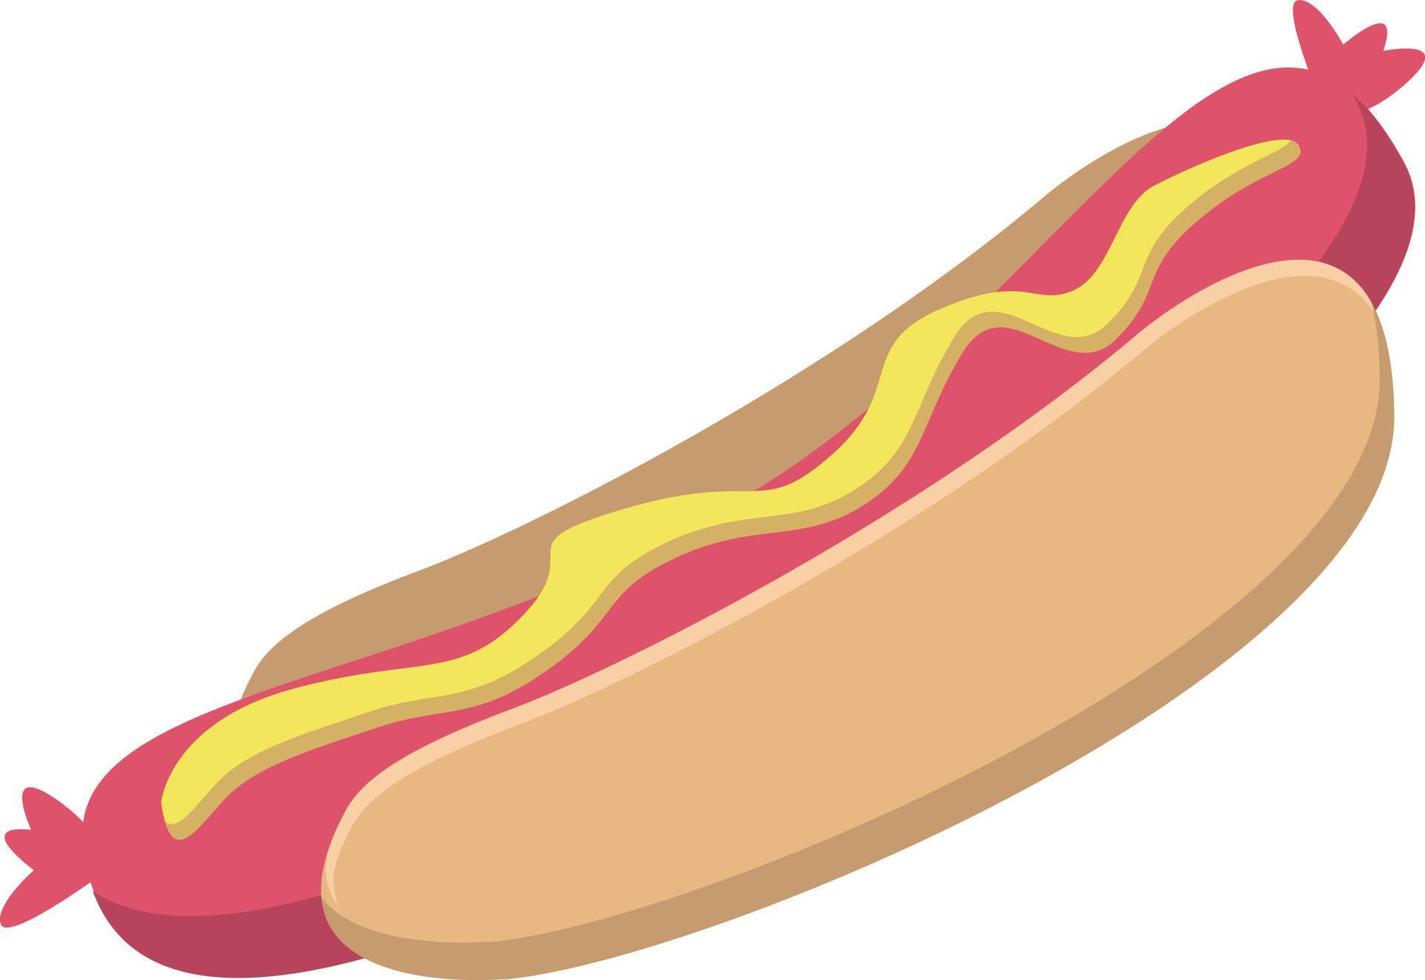 hotdog graphic illustration vector